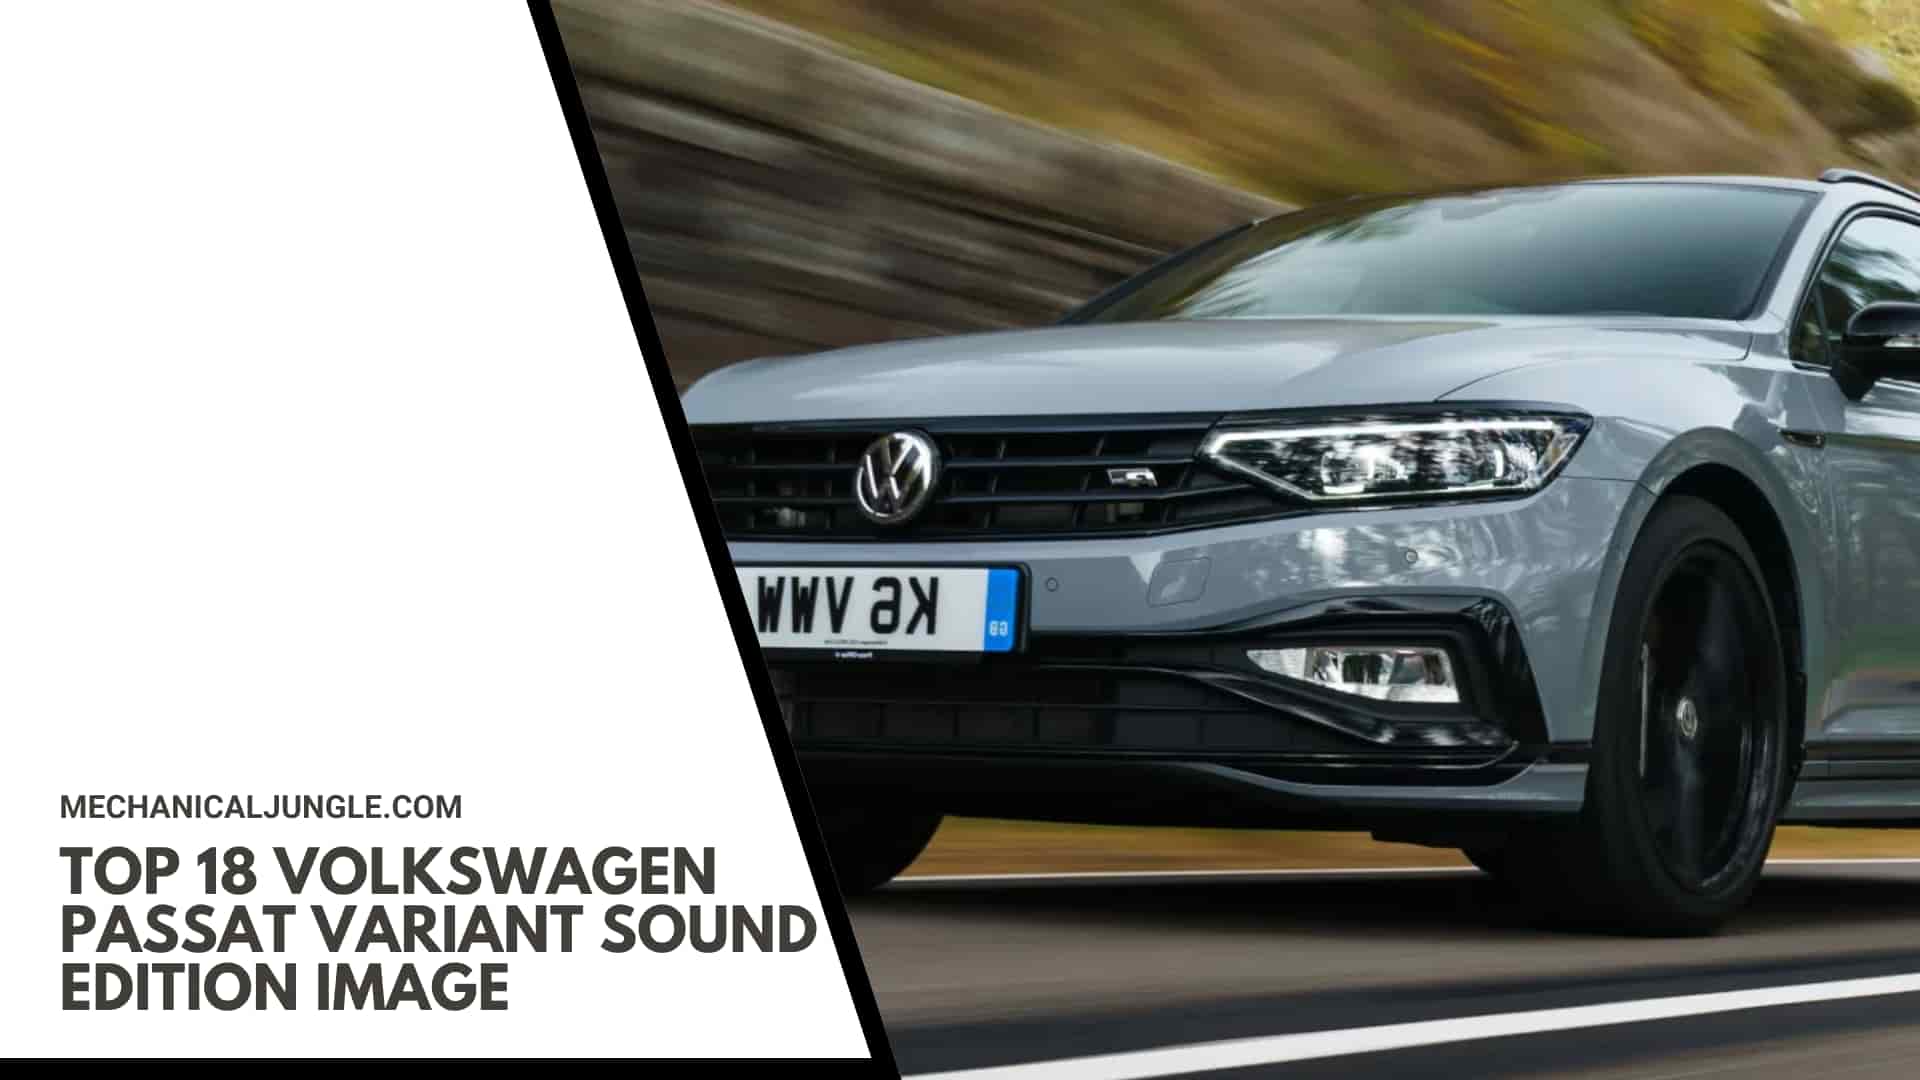 Top 18 Volkswagen Passat Variant Sound Edition Image